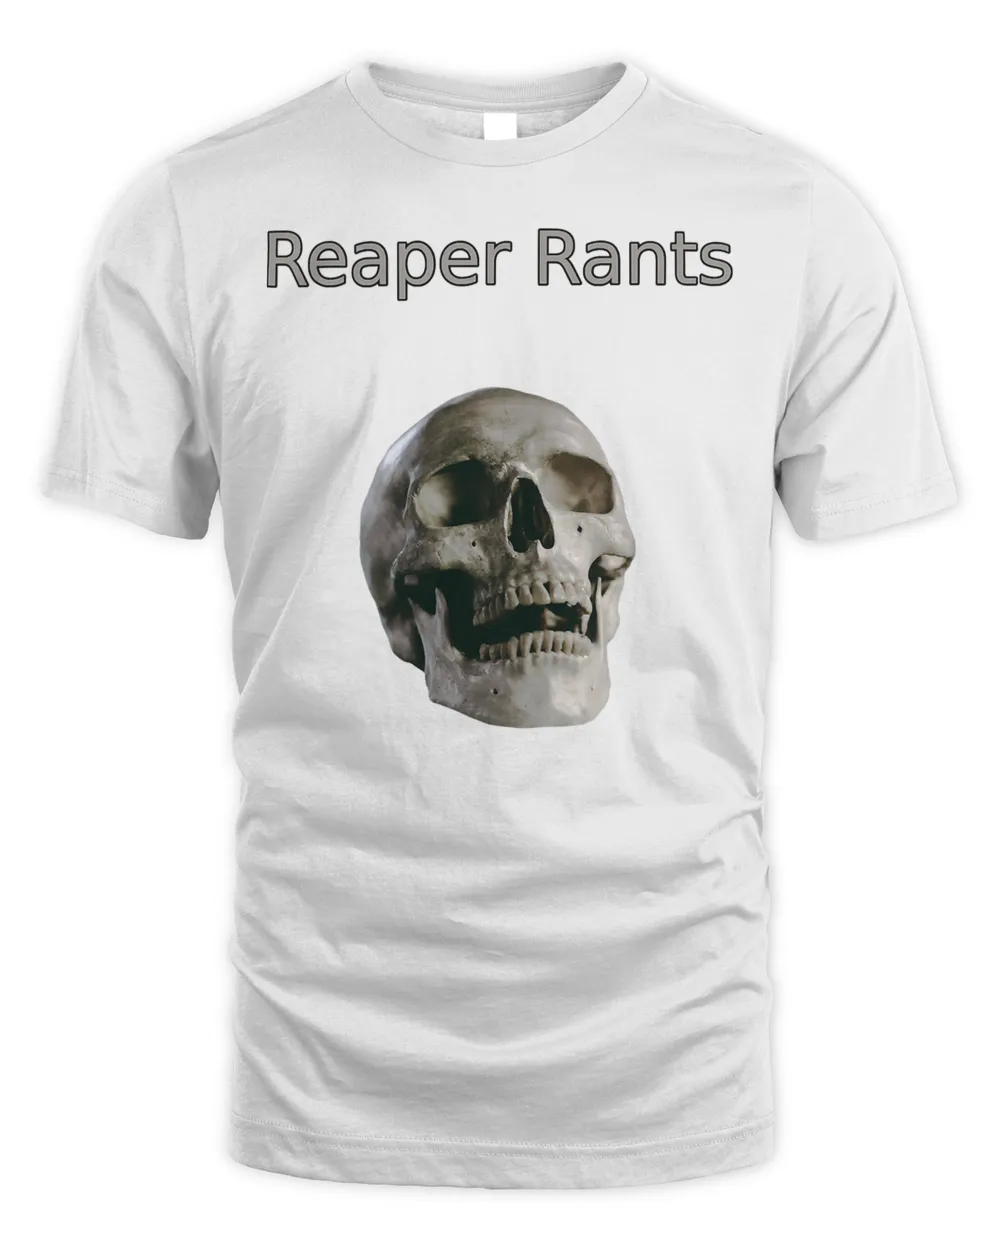 Official Reaper Rants Channel Merchandise T-Shirt